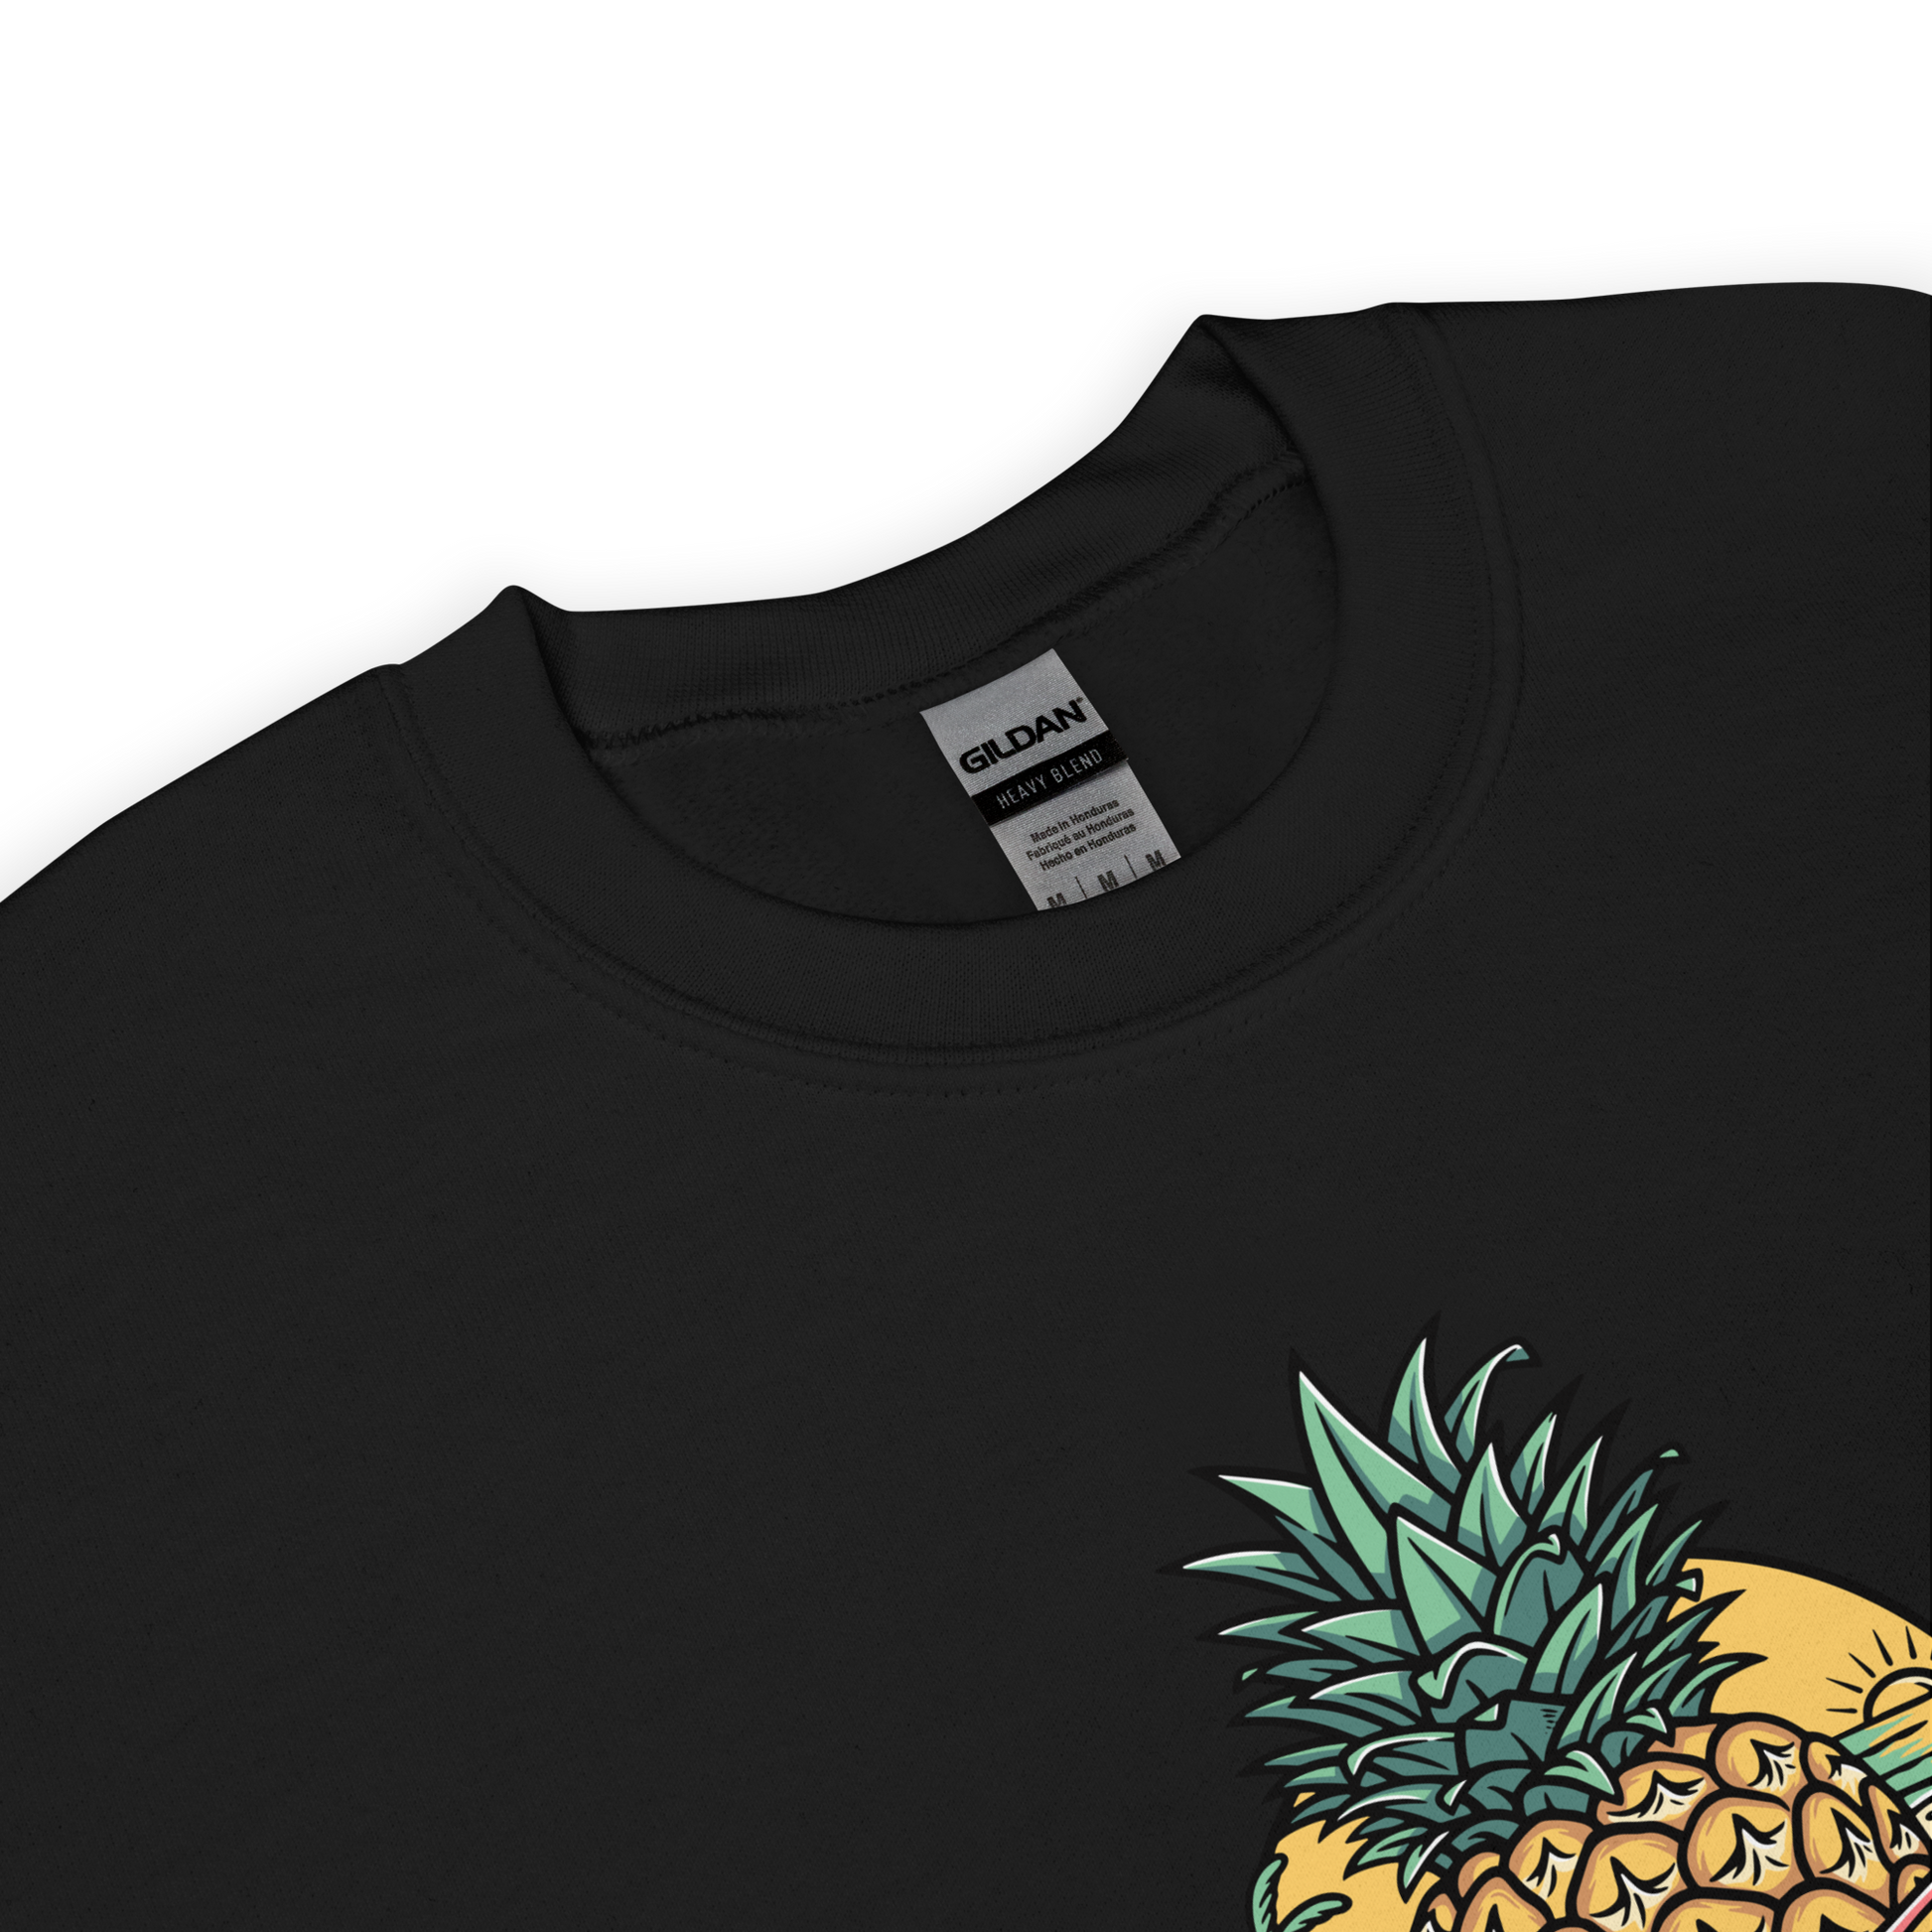 Product details of a Black Tropical Mayhem Sweatshirt featuring a Crazy Pineapple Skull graphic on the chest - Funny Graphic Pineapple Sweatshirts - Boozy Fox